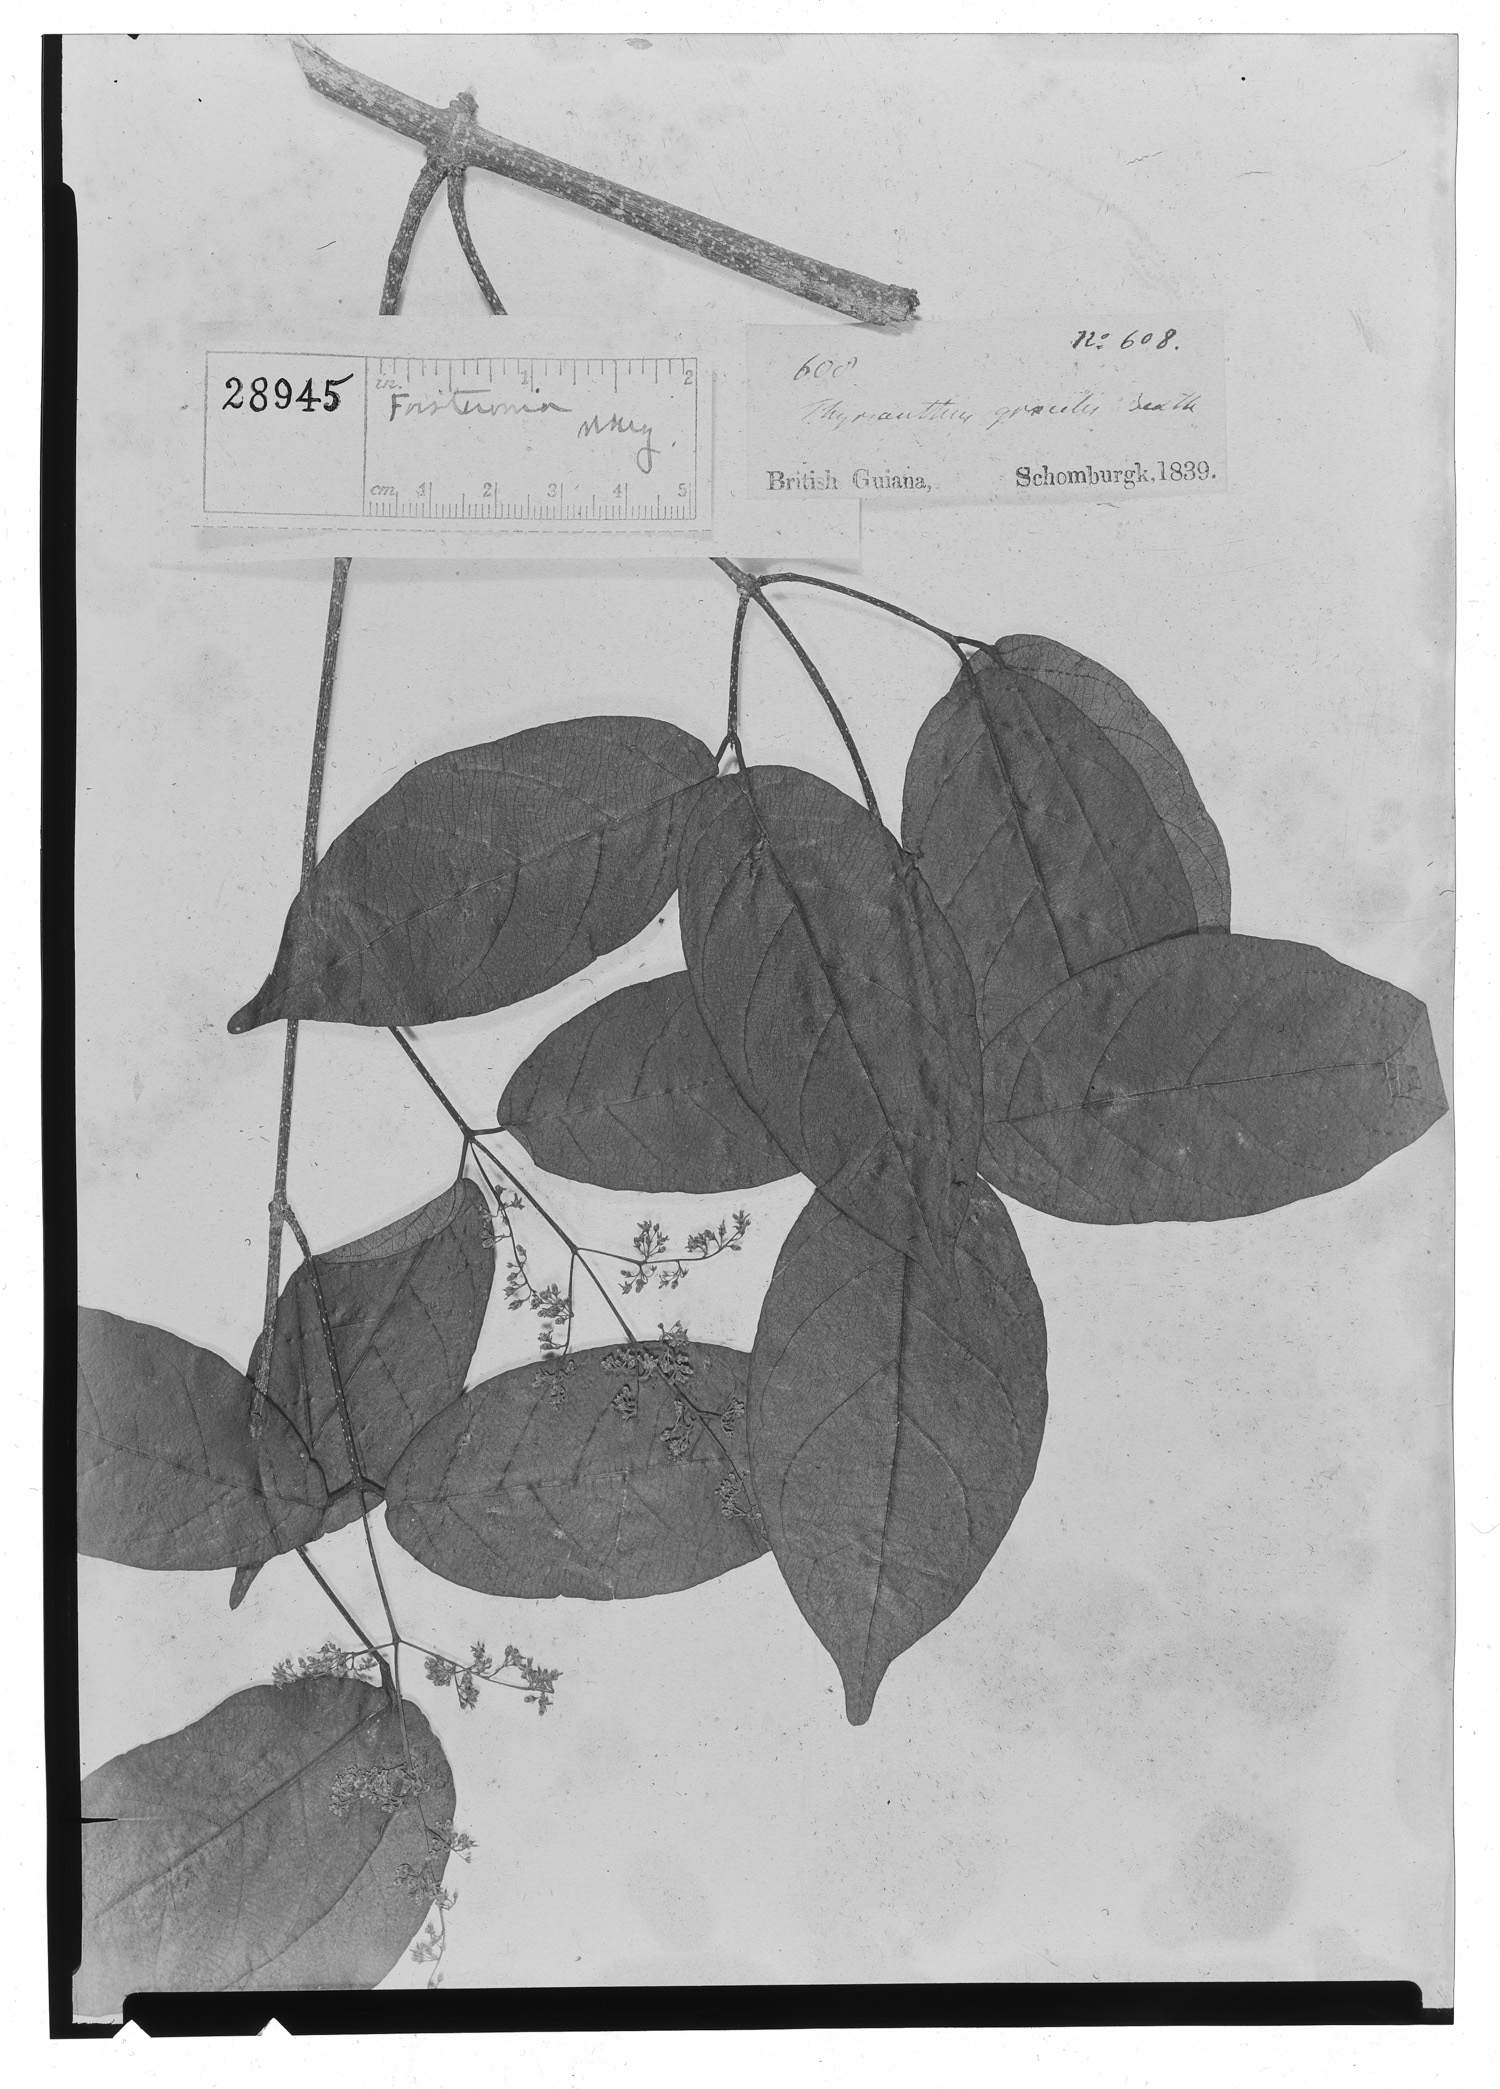 Forsteronia gracilis image